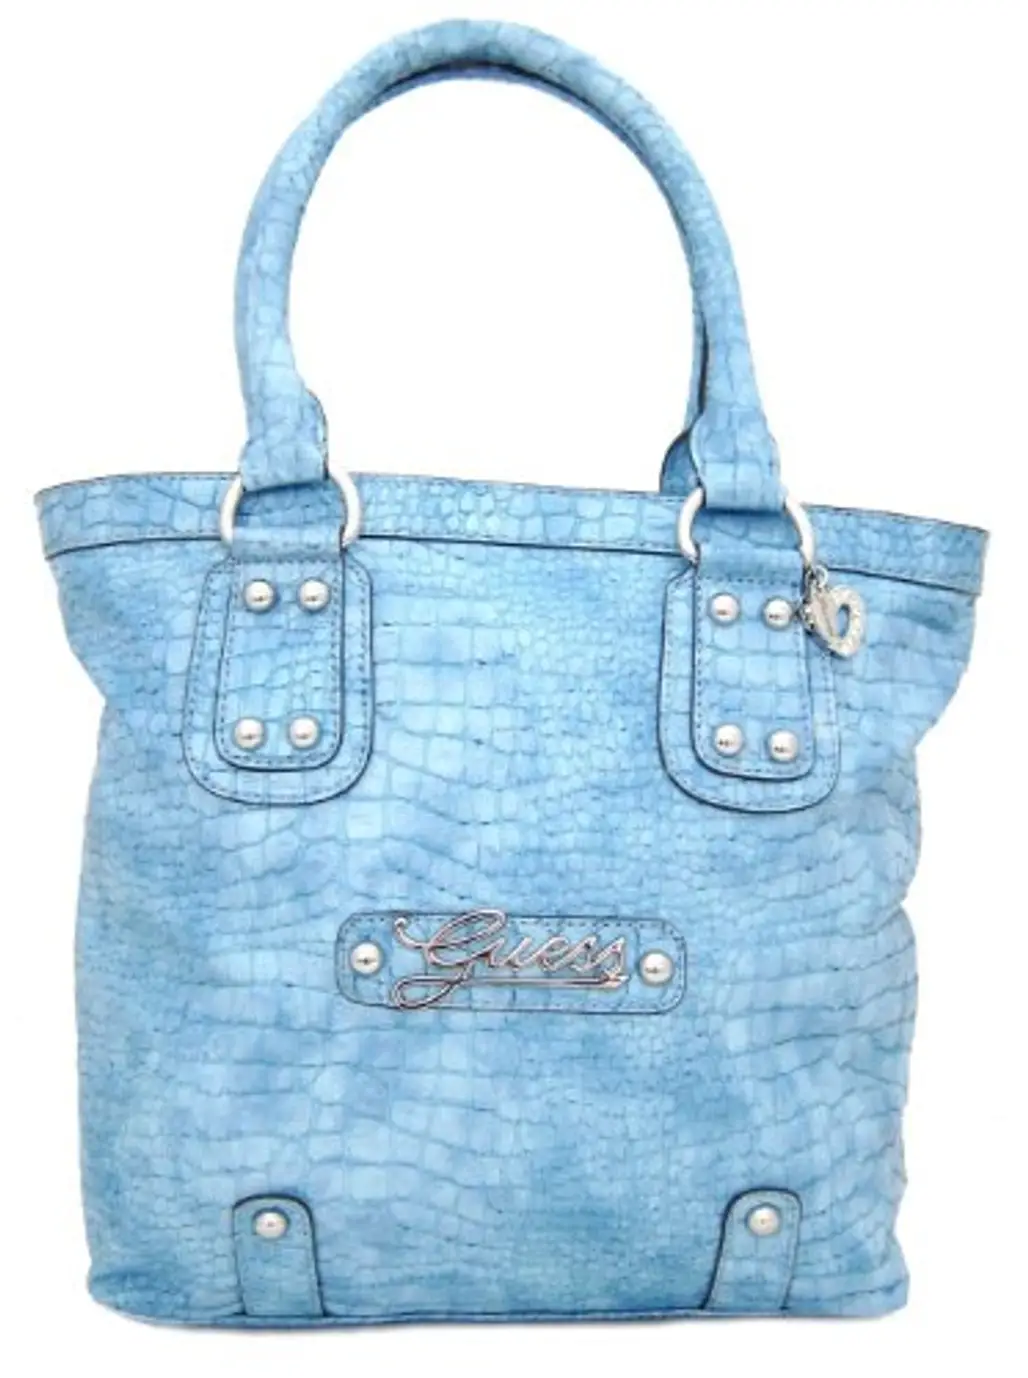 Guess Sundance Small Shopper Handbag Purse, Turquoise